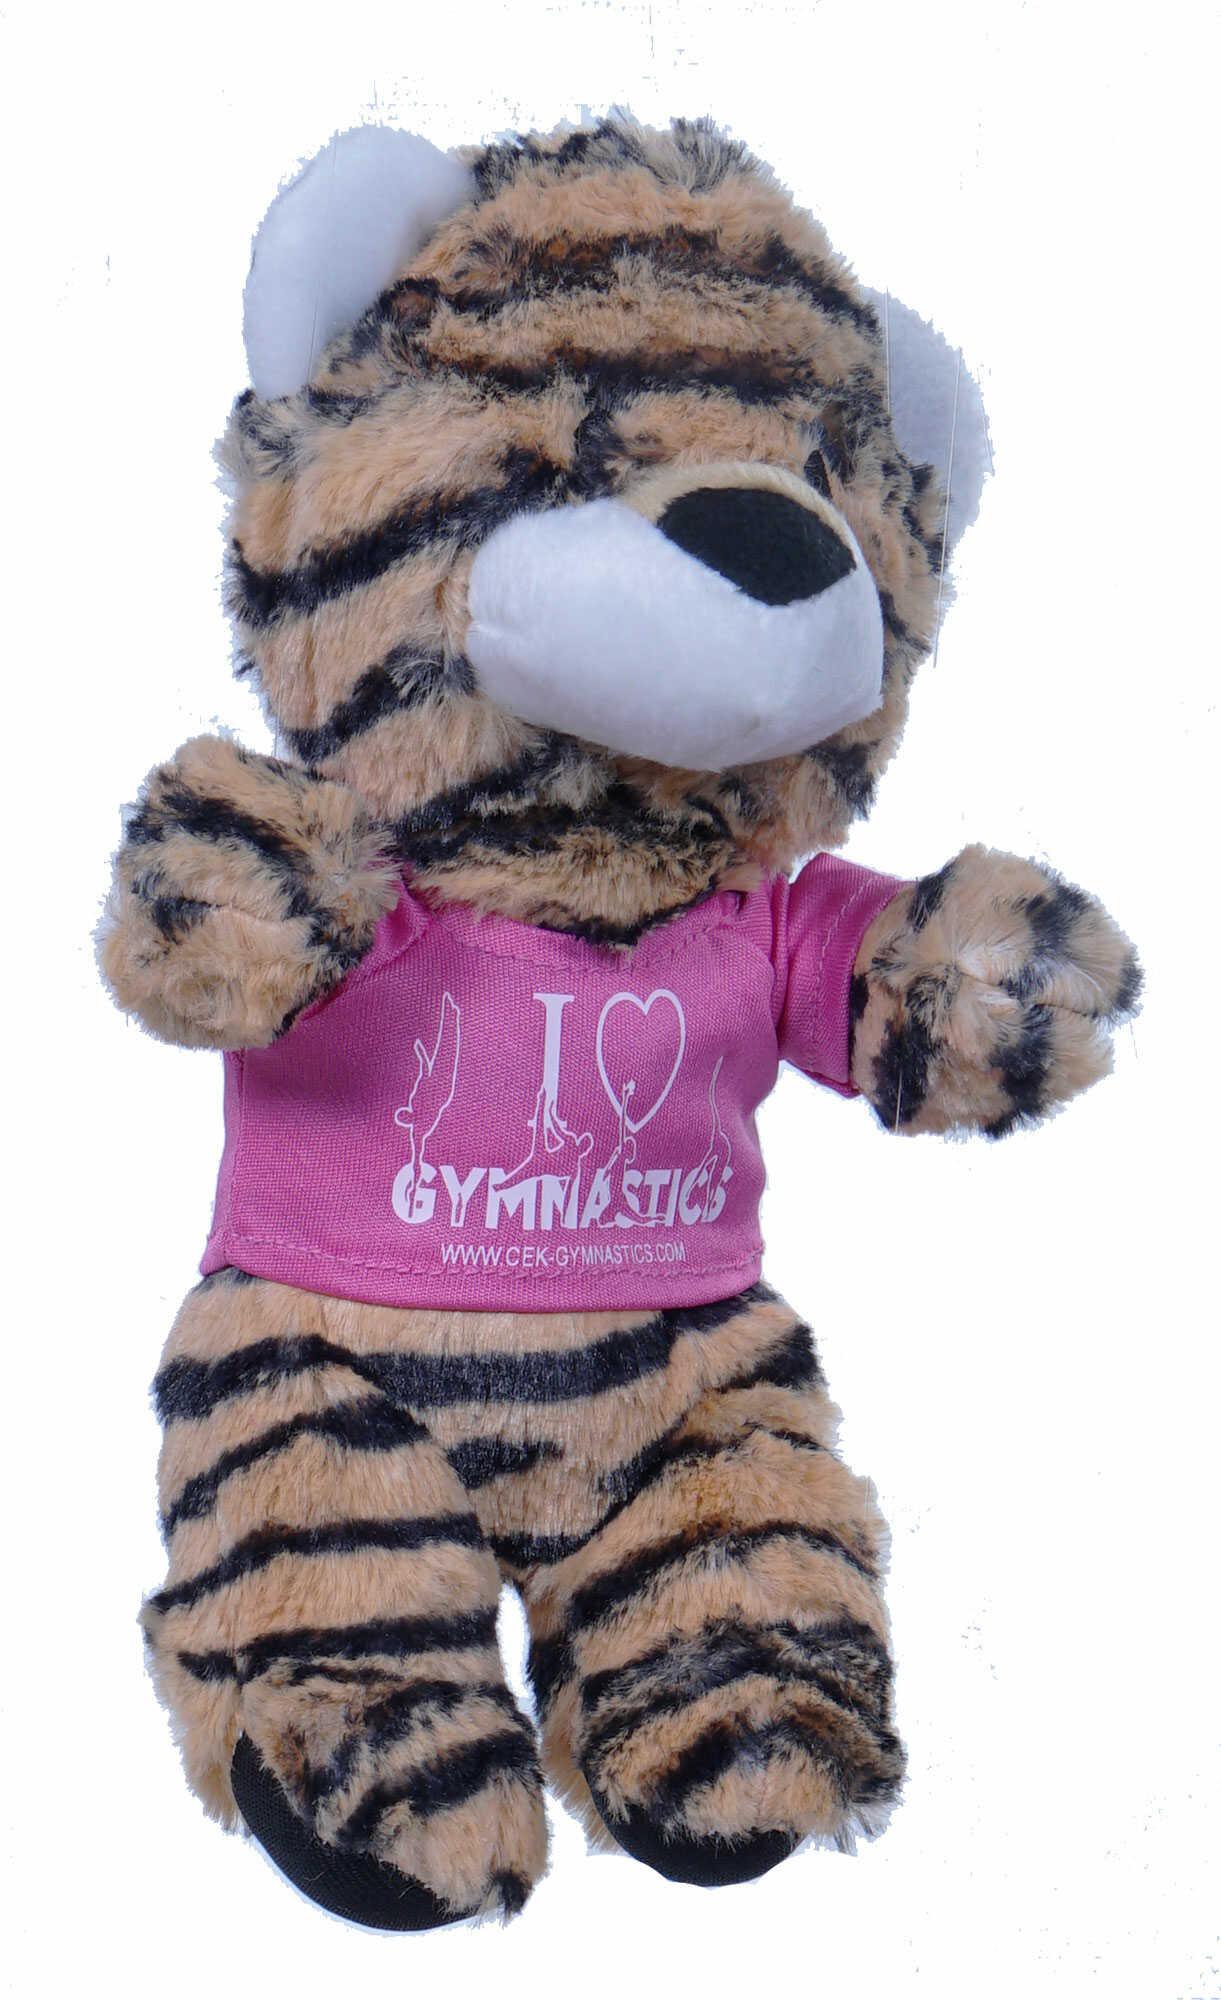 Peluche tigre con camiseta promocional